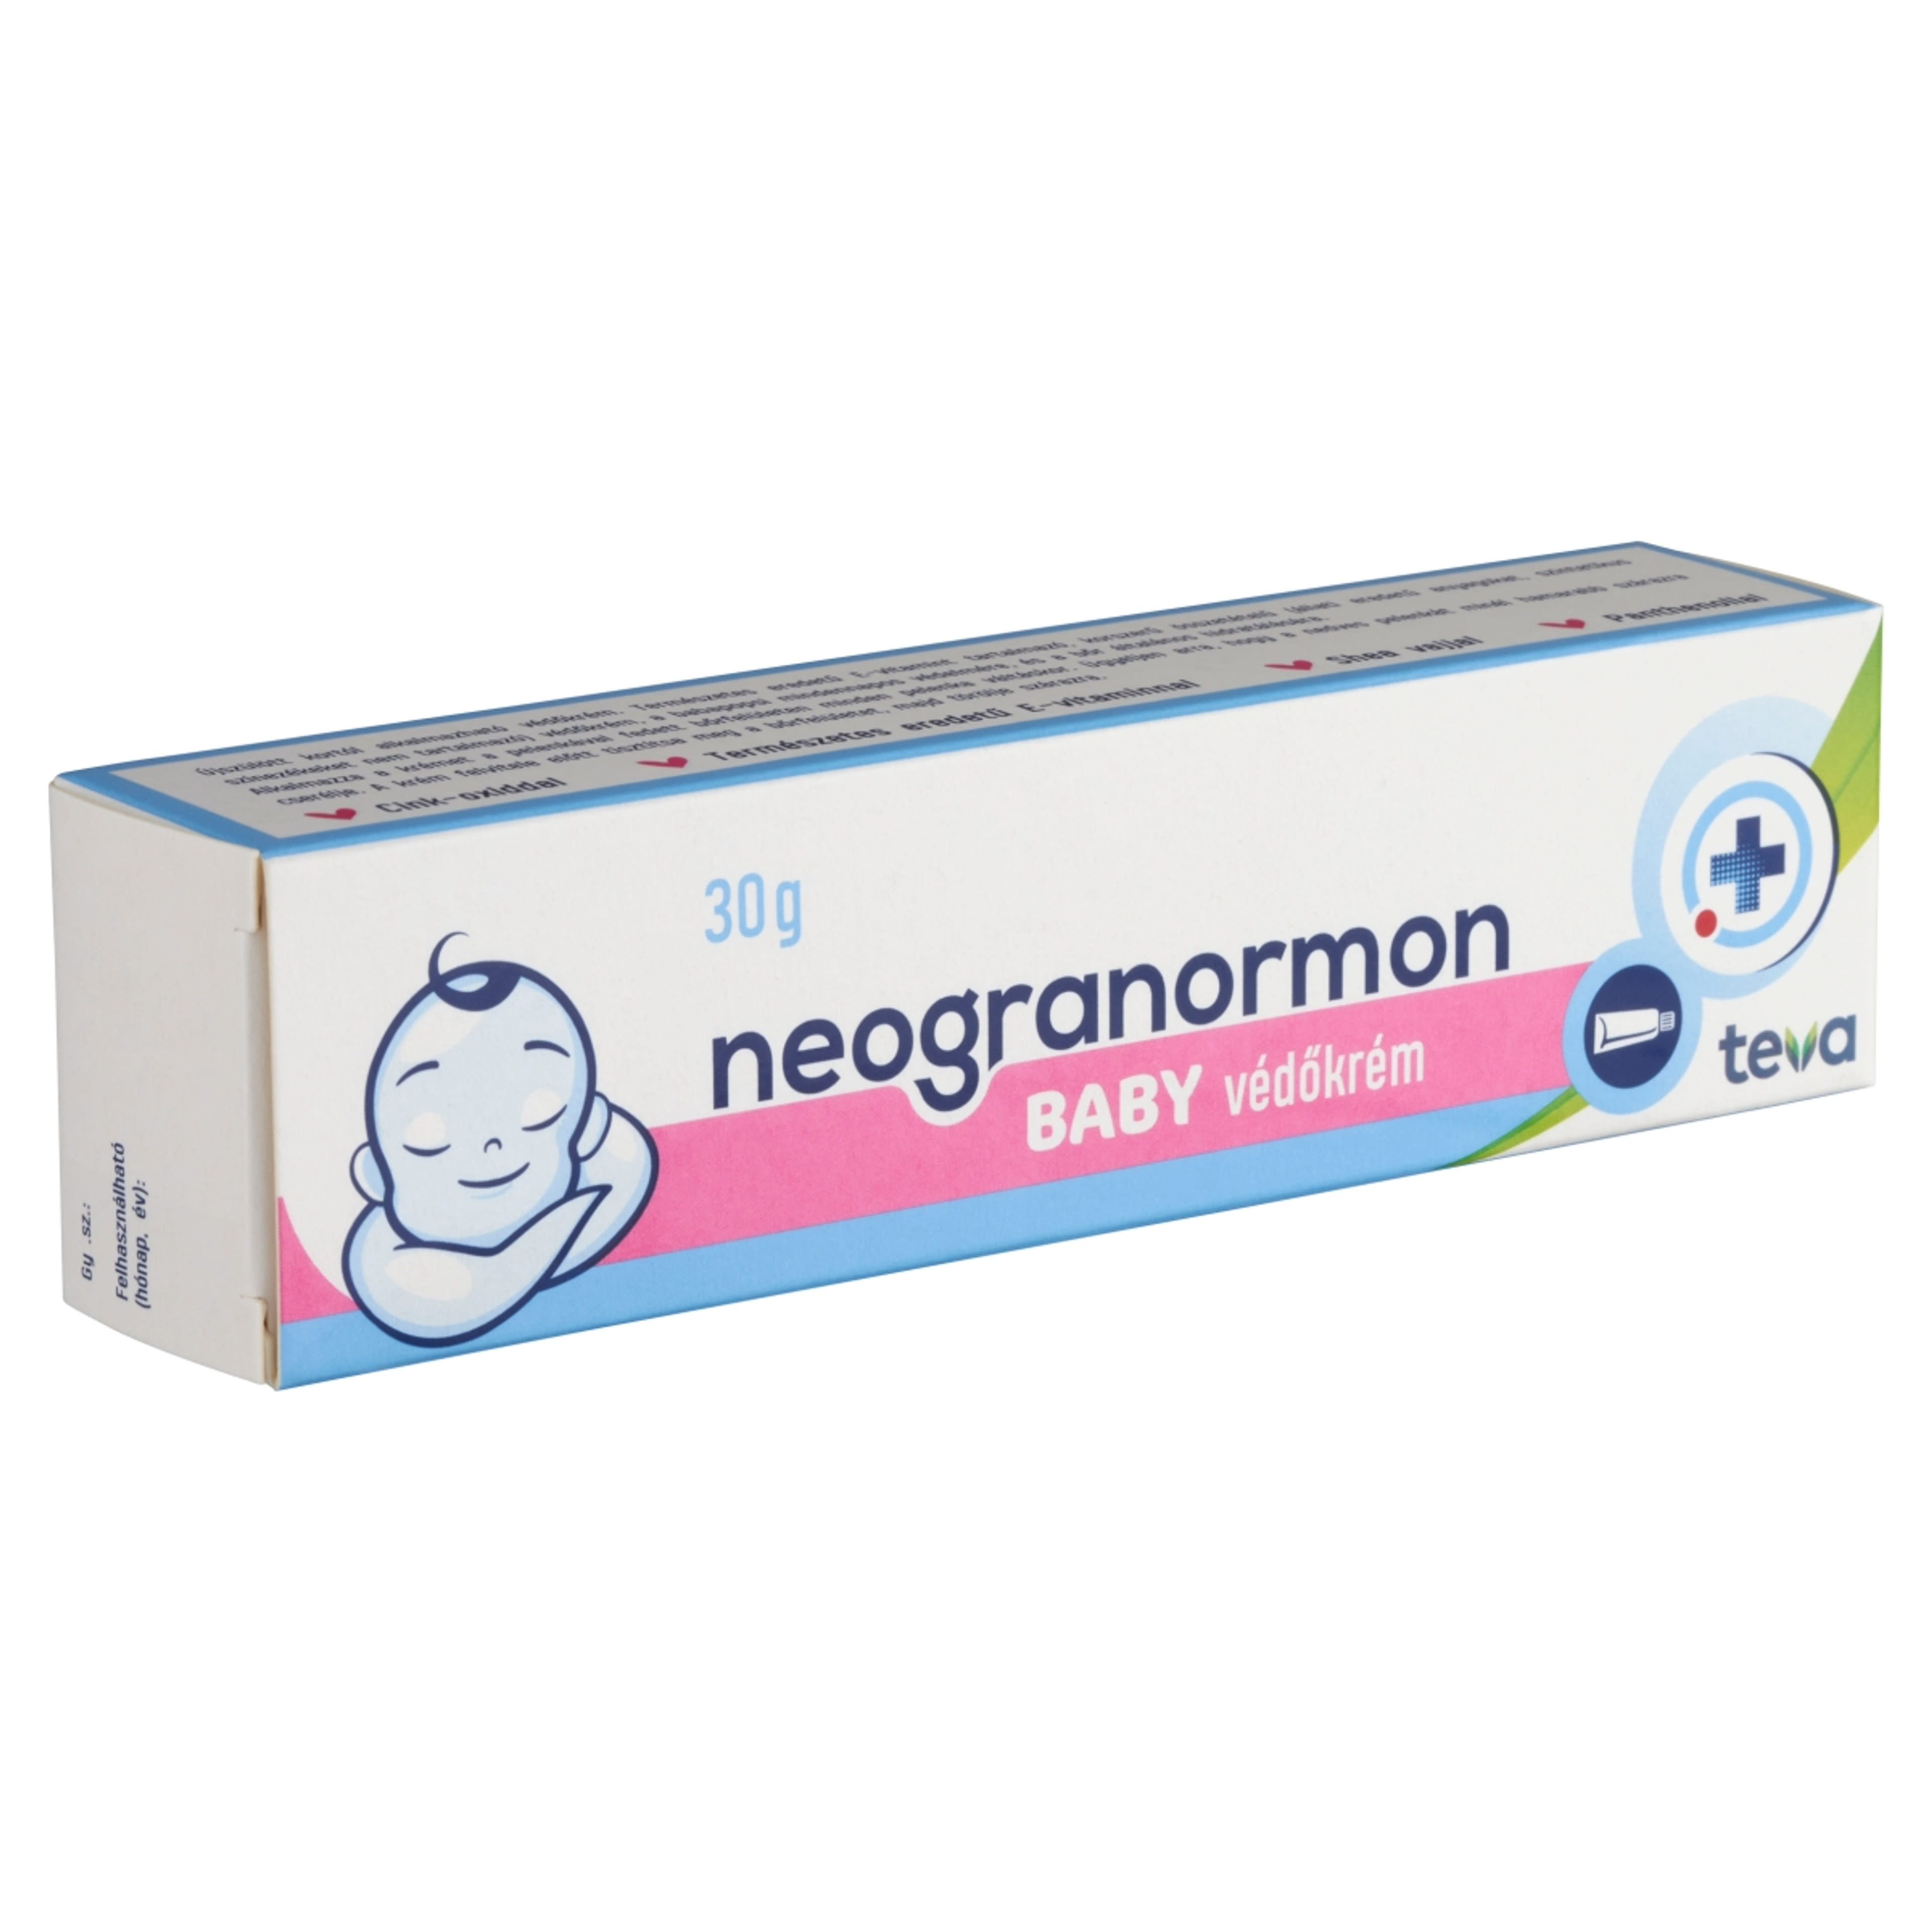 Neogranormon Baby védőkrém - 30 g-2